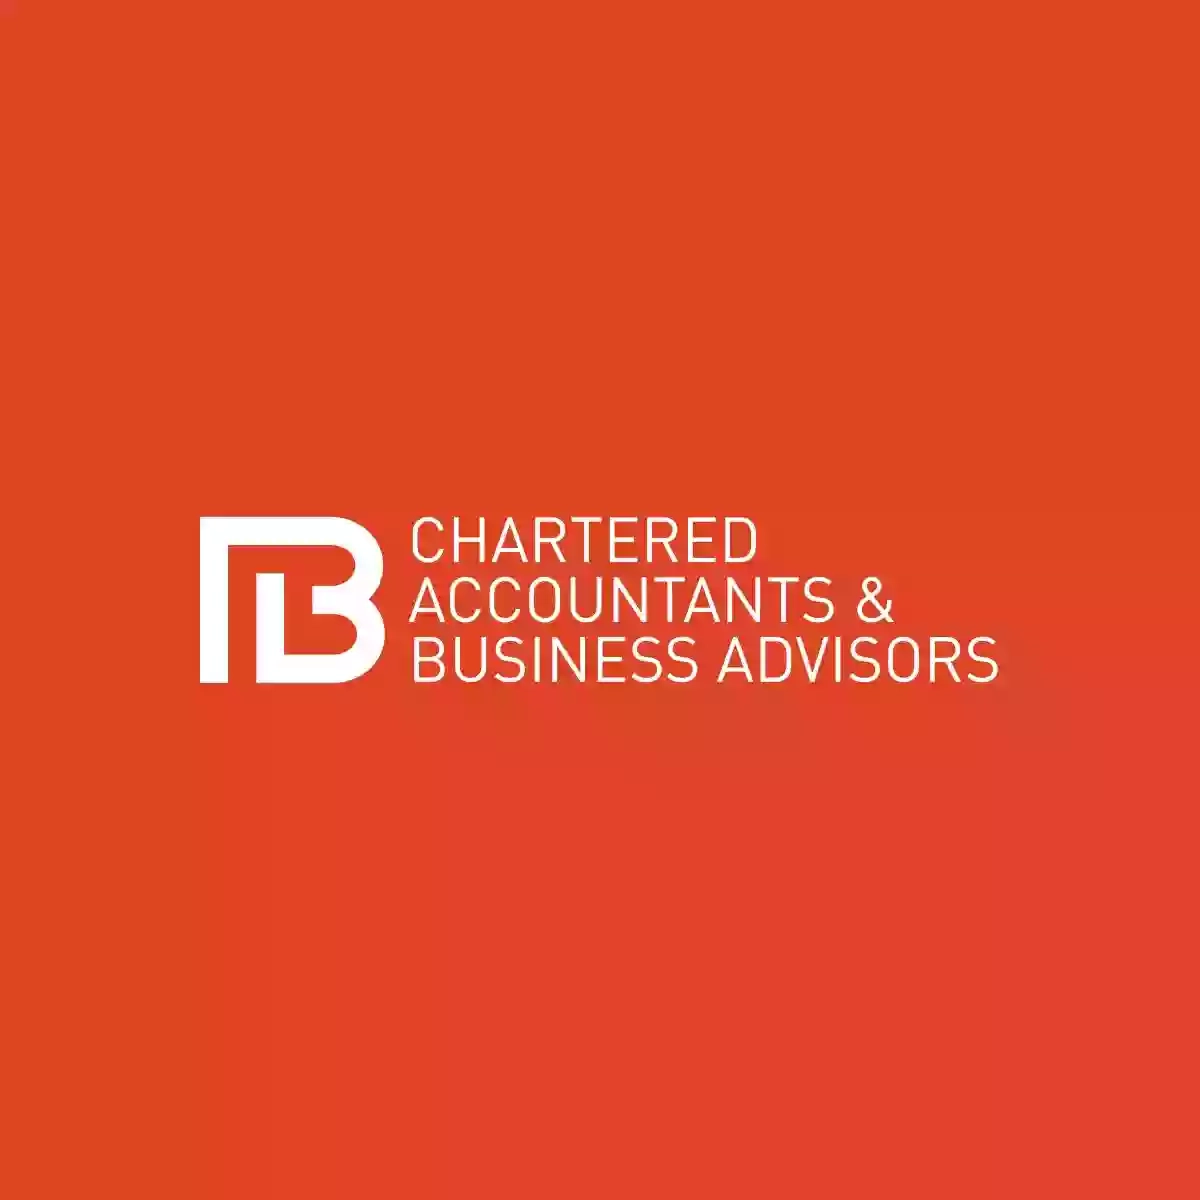 FLB Chartered Accountants & Business Advisors